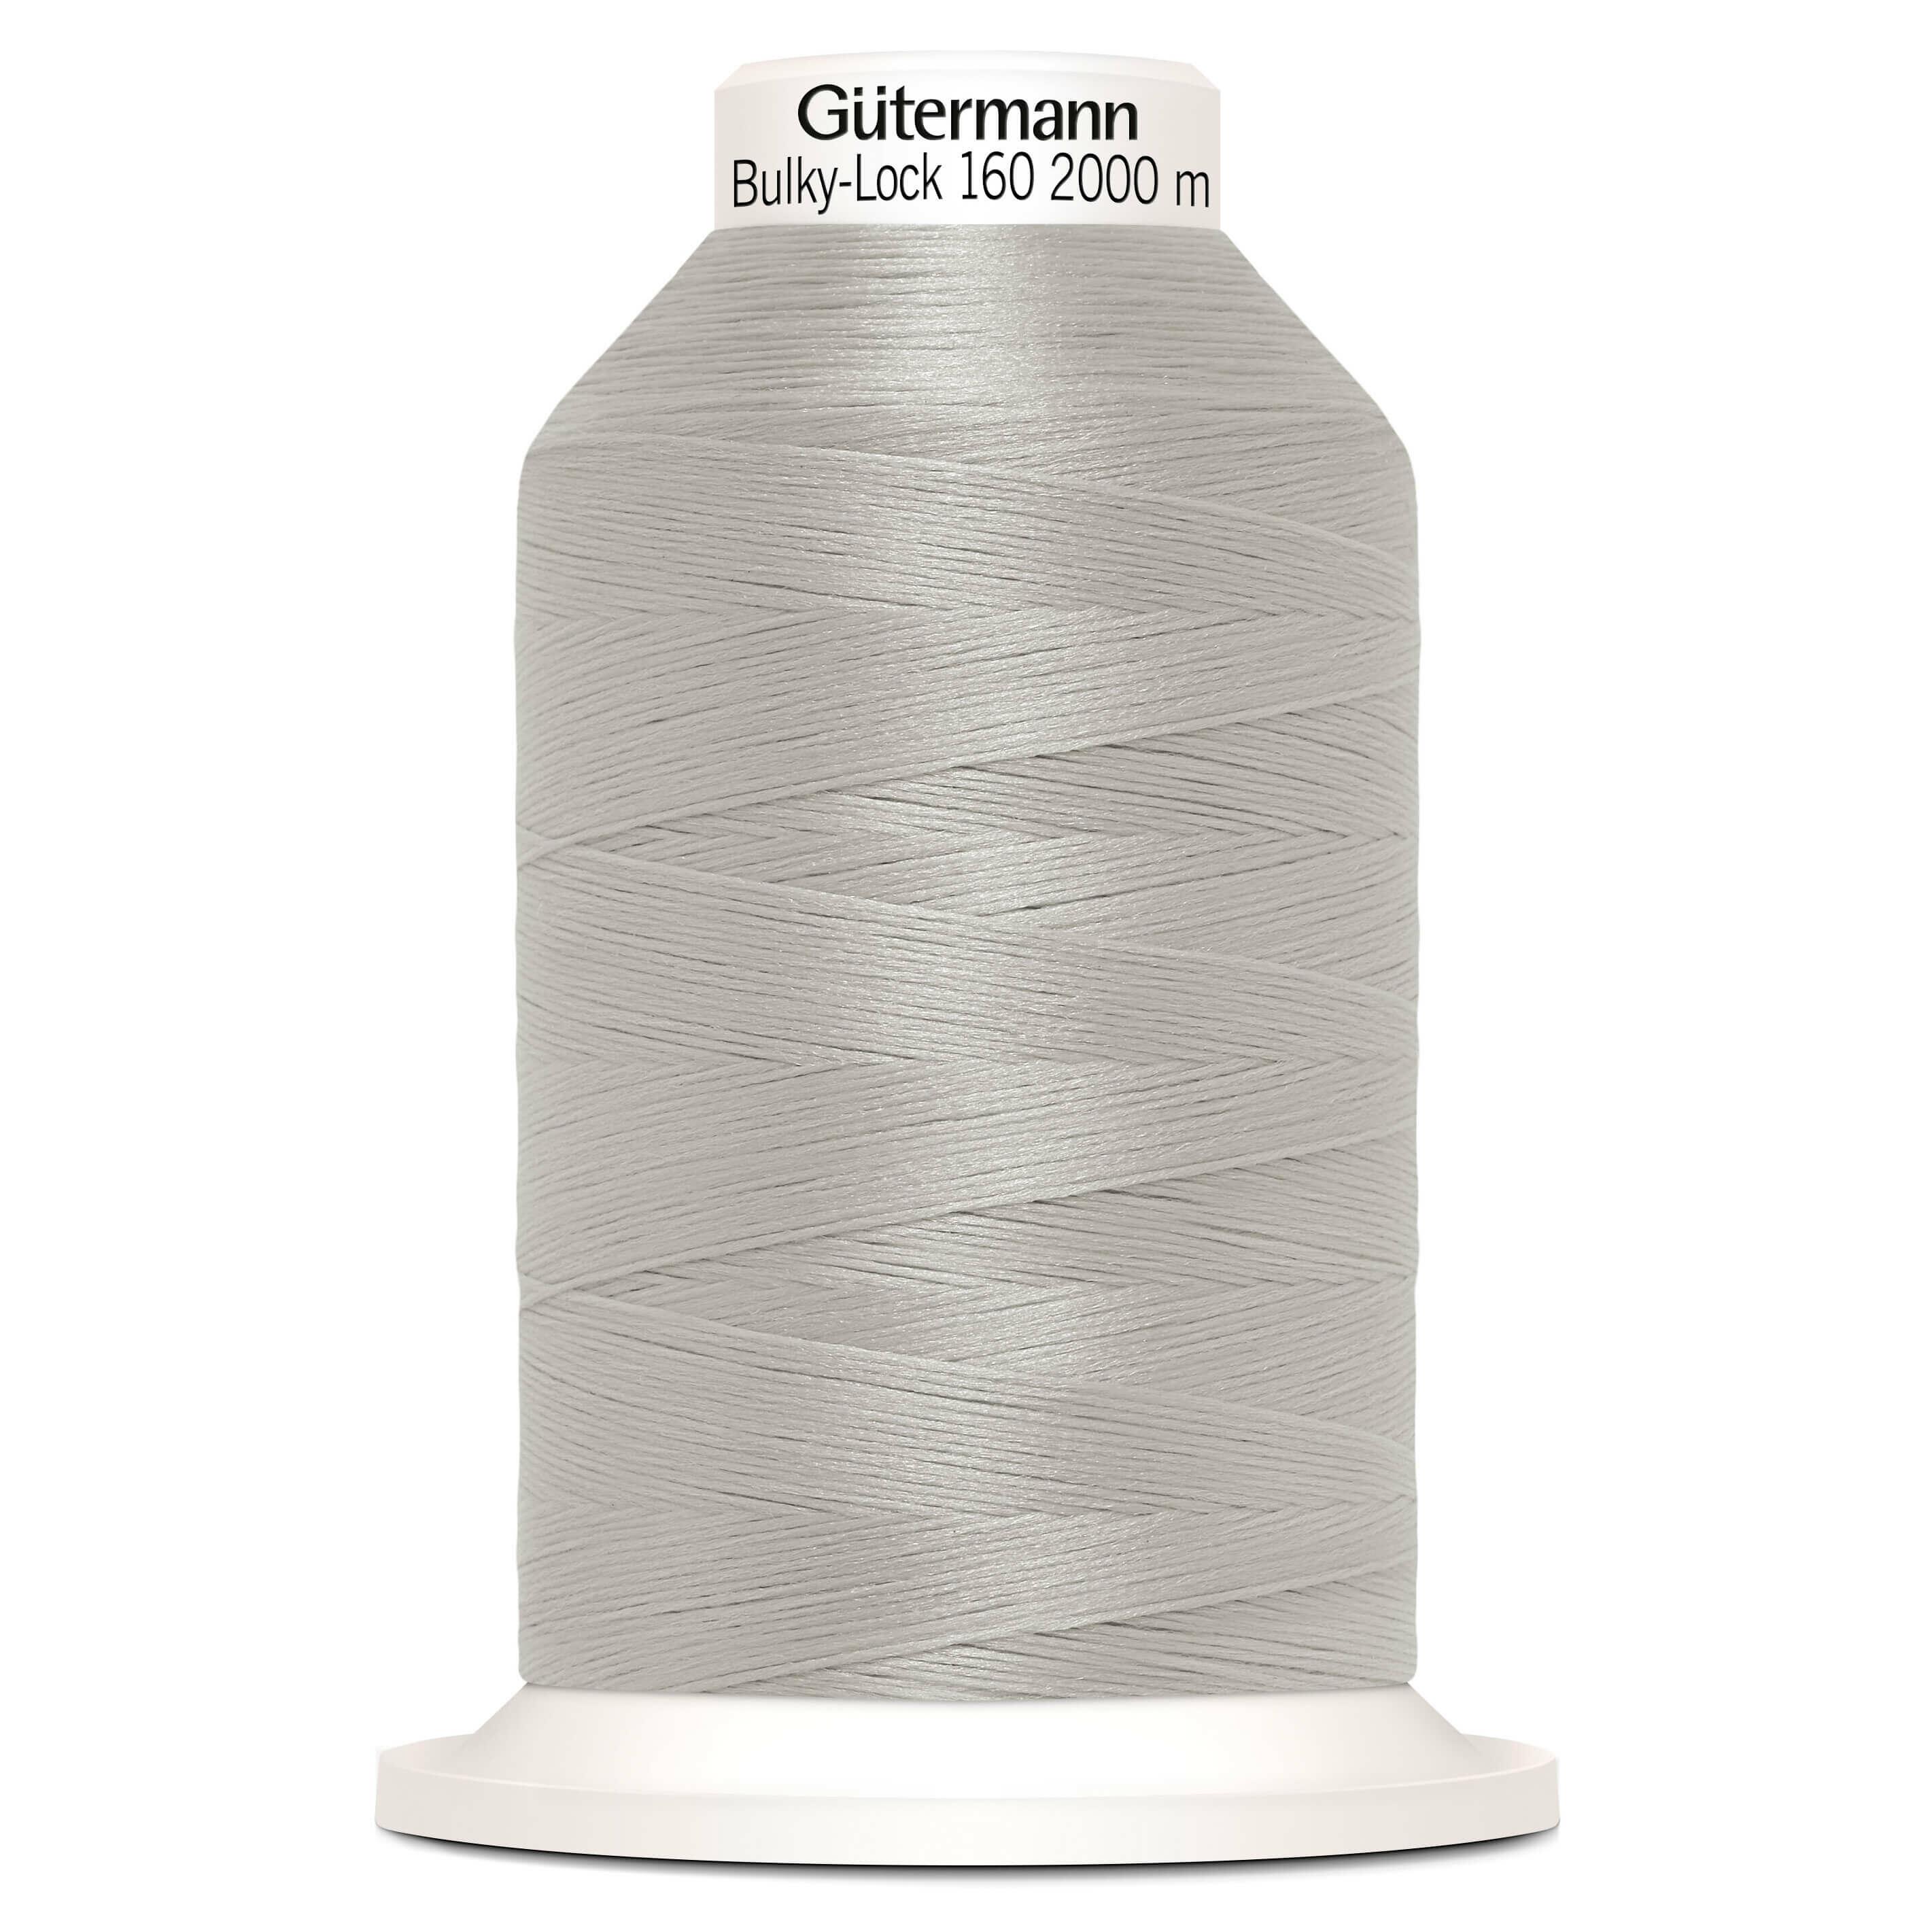 Gutermann Bulky-lock 160 2000m overlocking thread in colour number 038 Light Grey